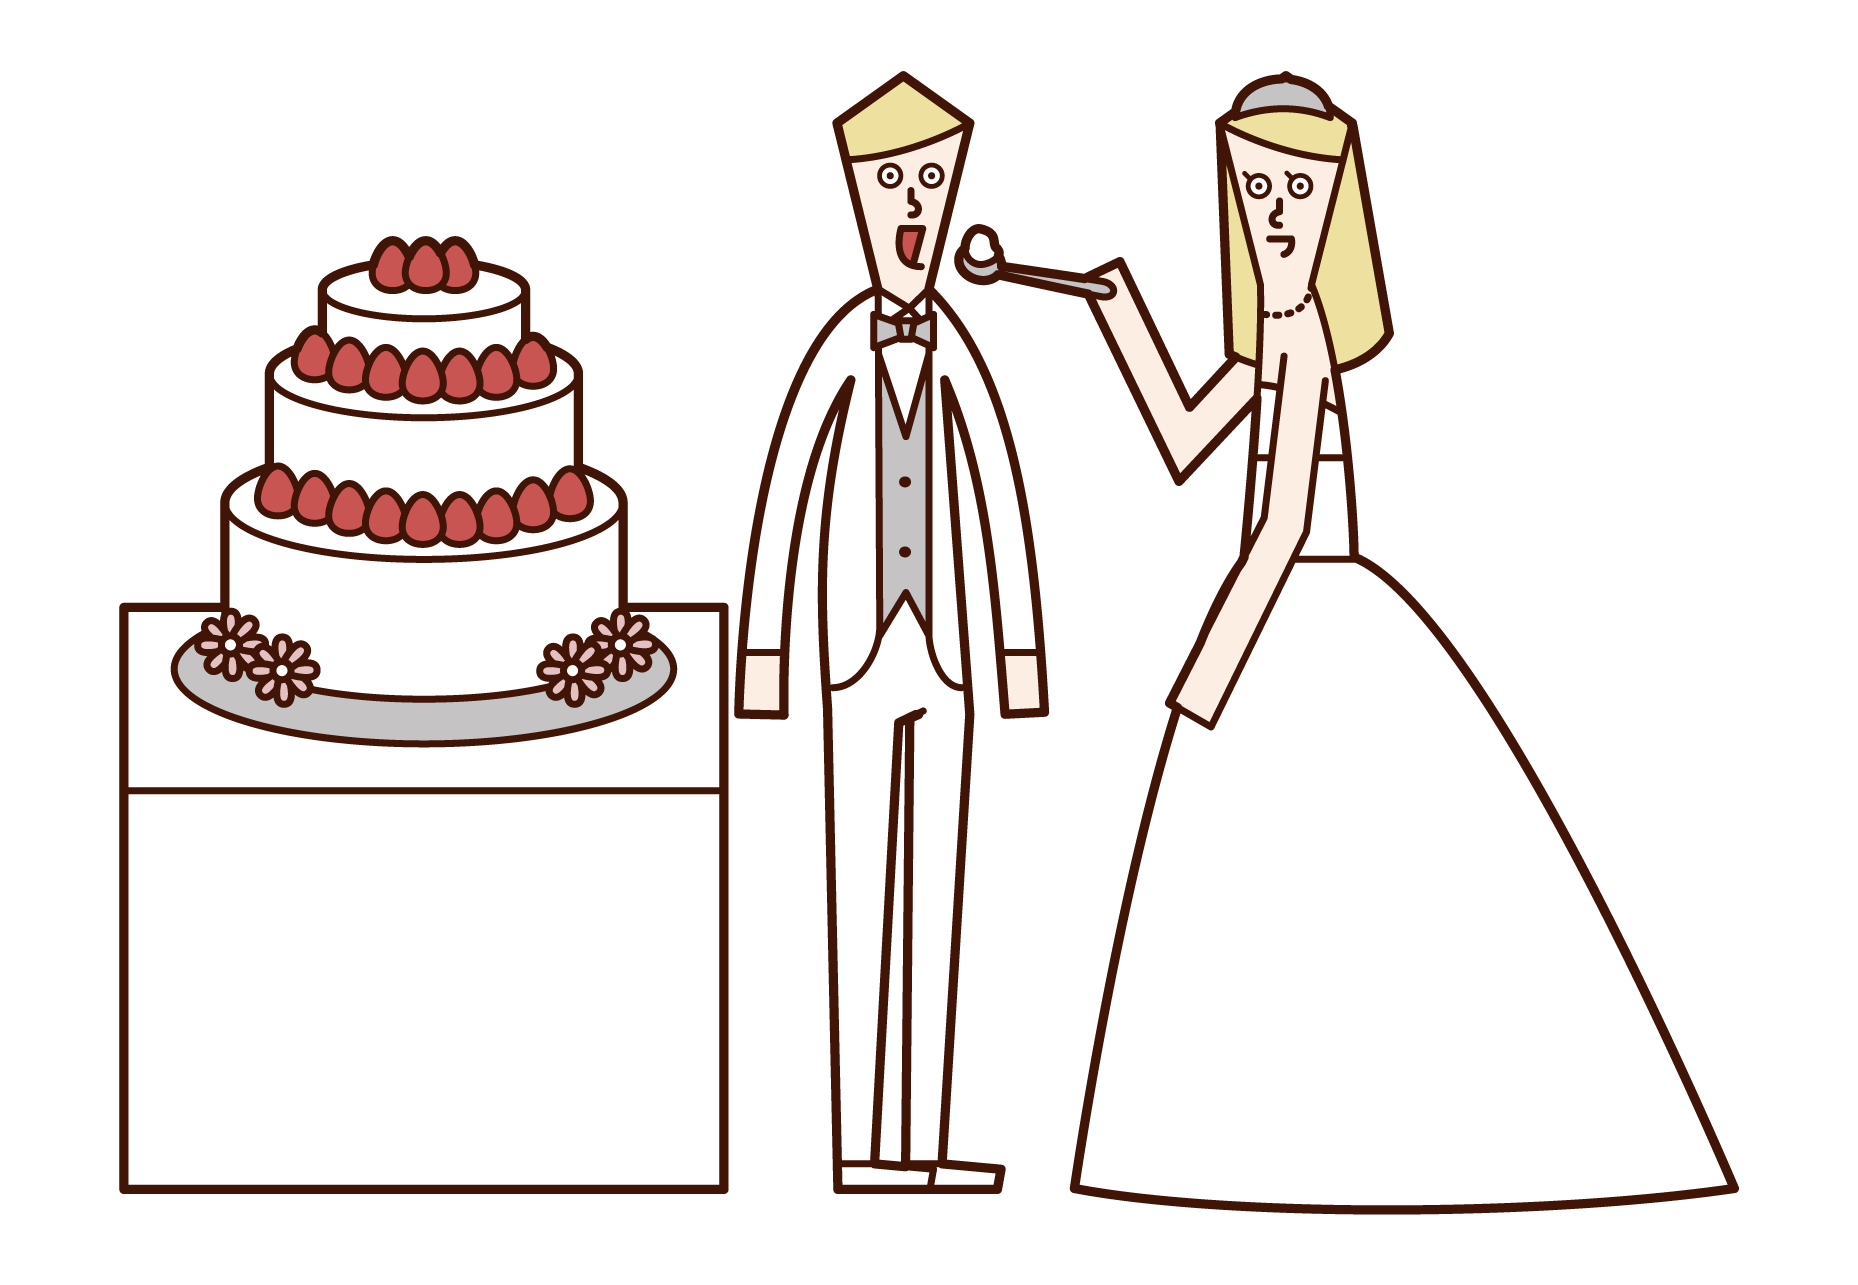 Illustration of bride and groom eating wedding cake